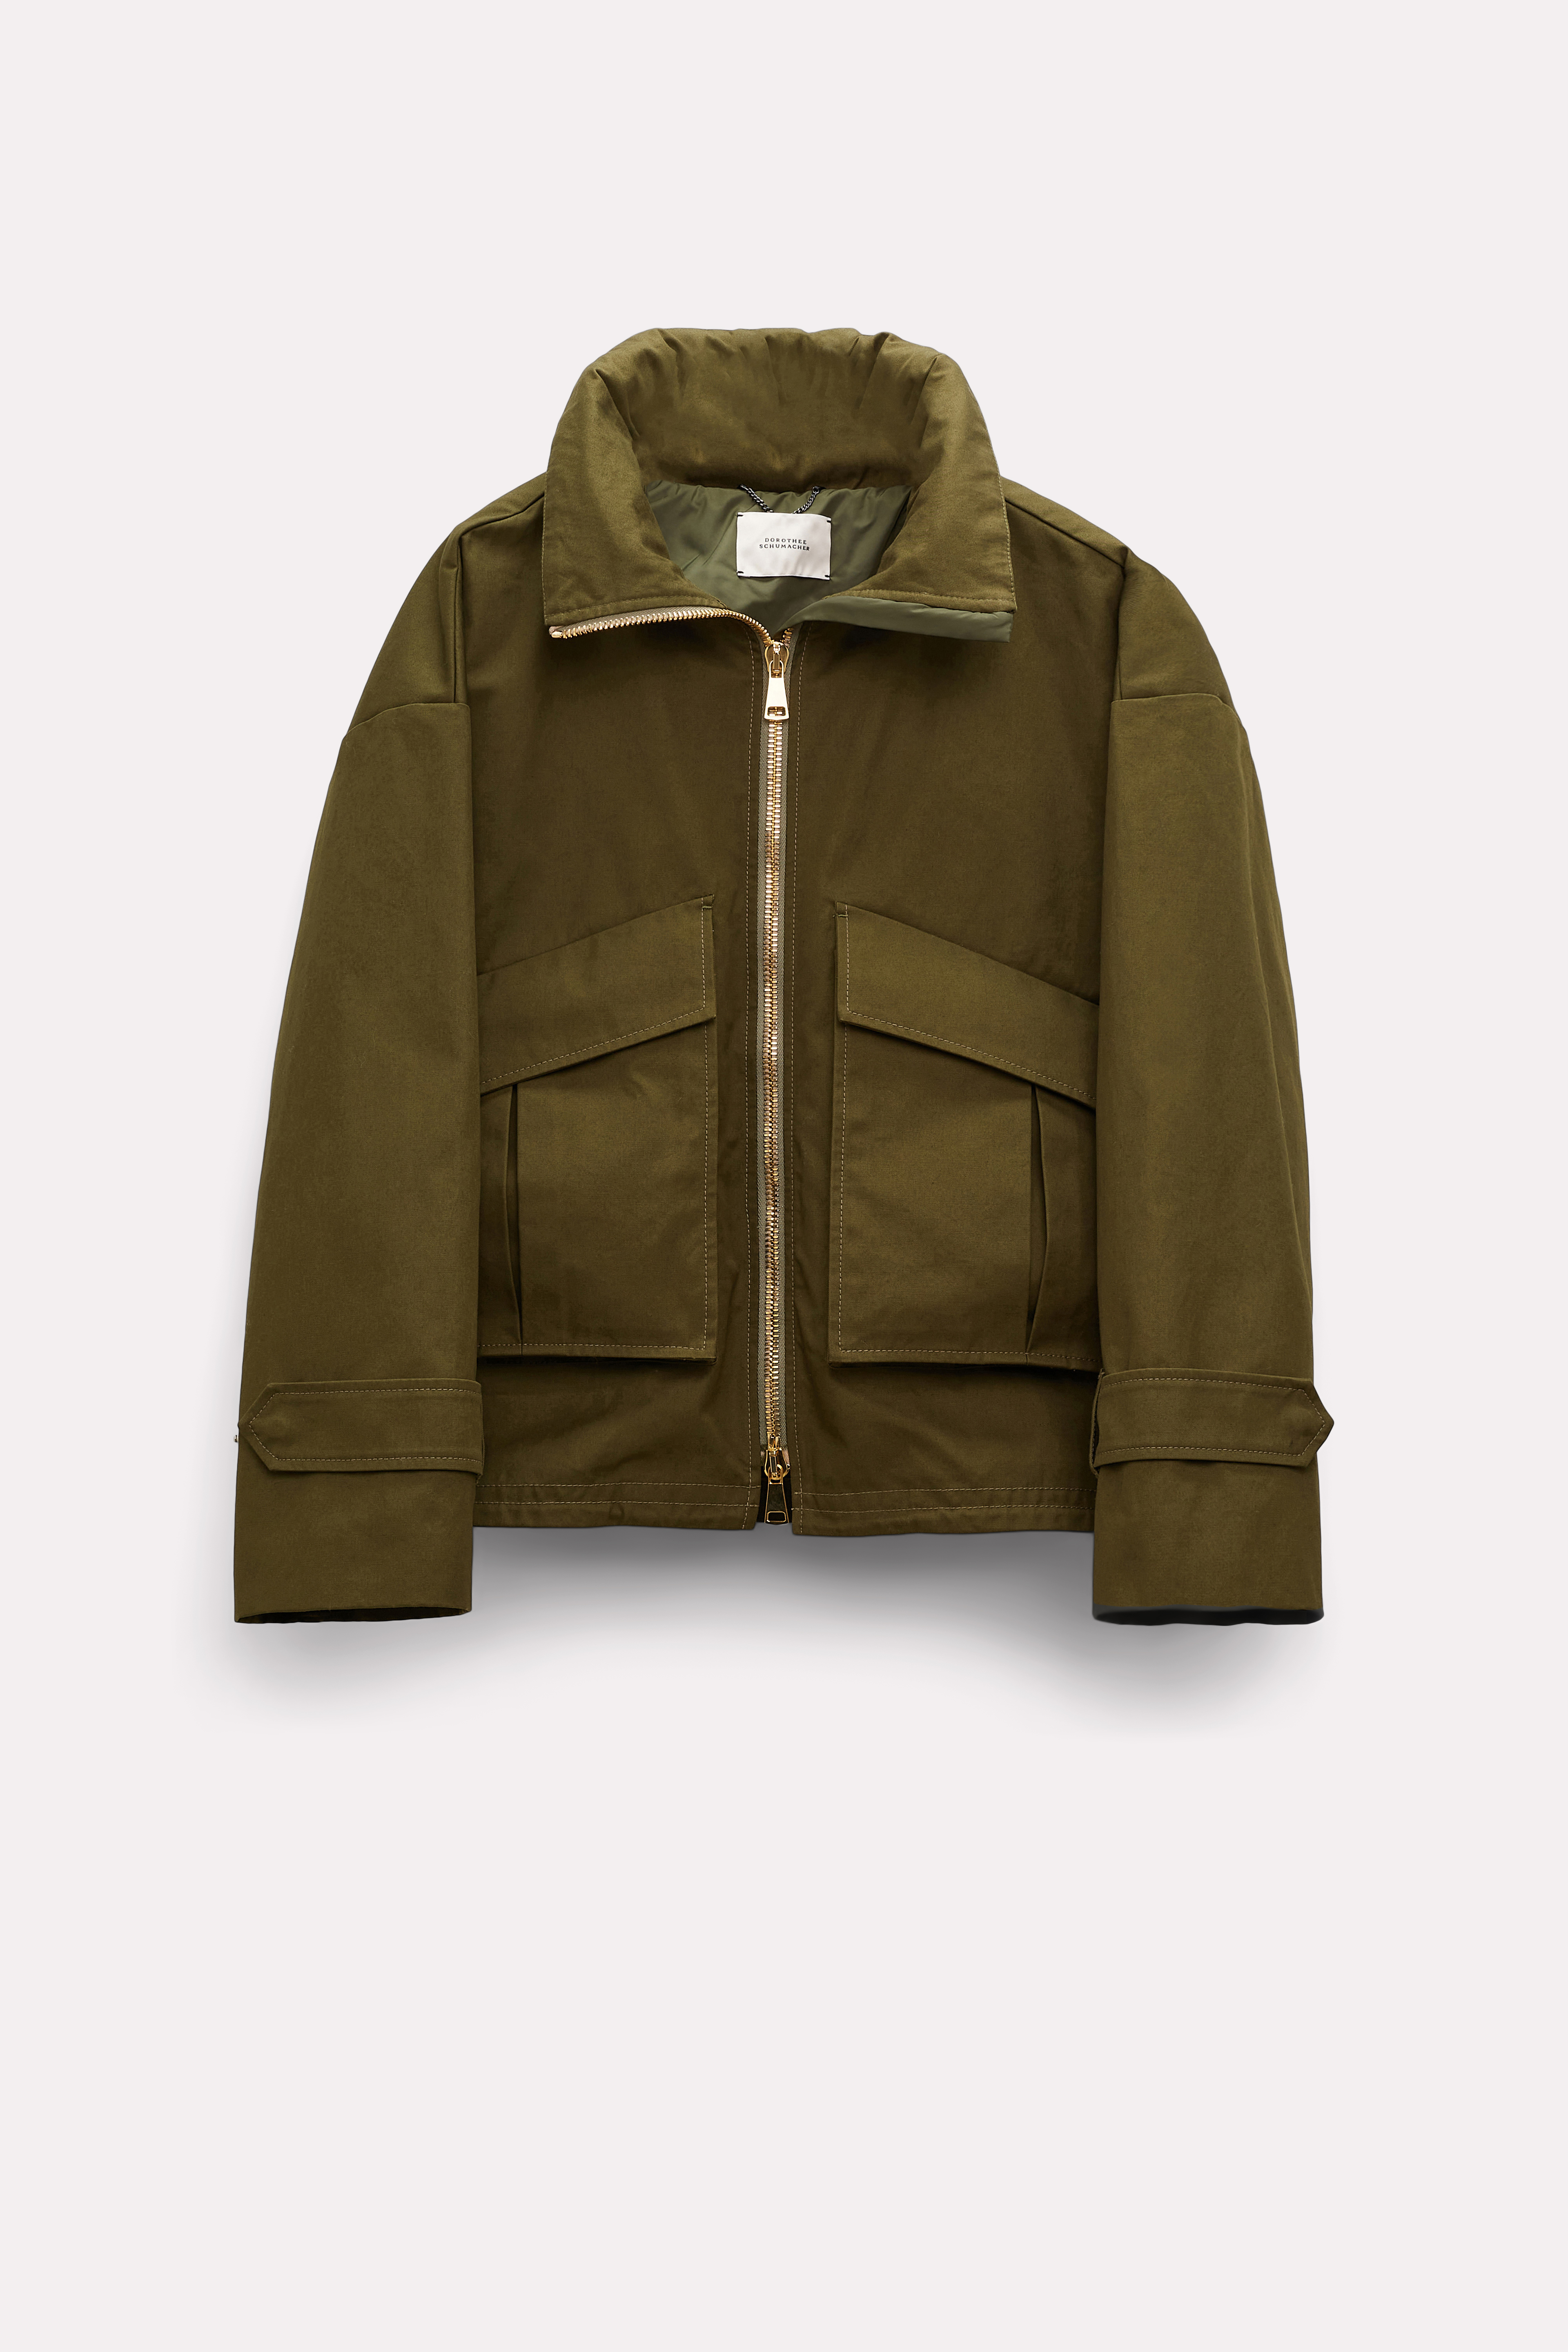 Jackets & Coats Sale | DOROTHEE SCHUMACHER - Official Online Store